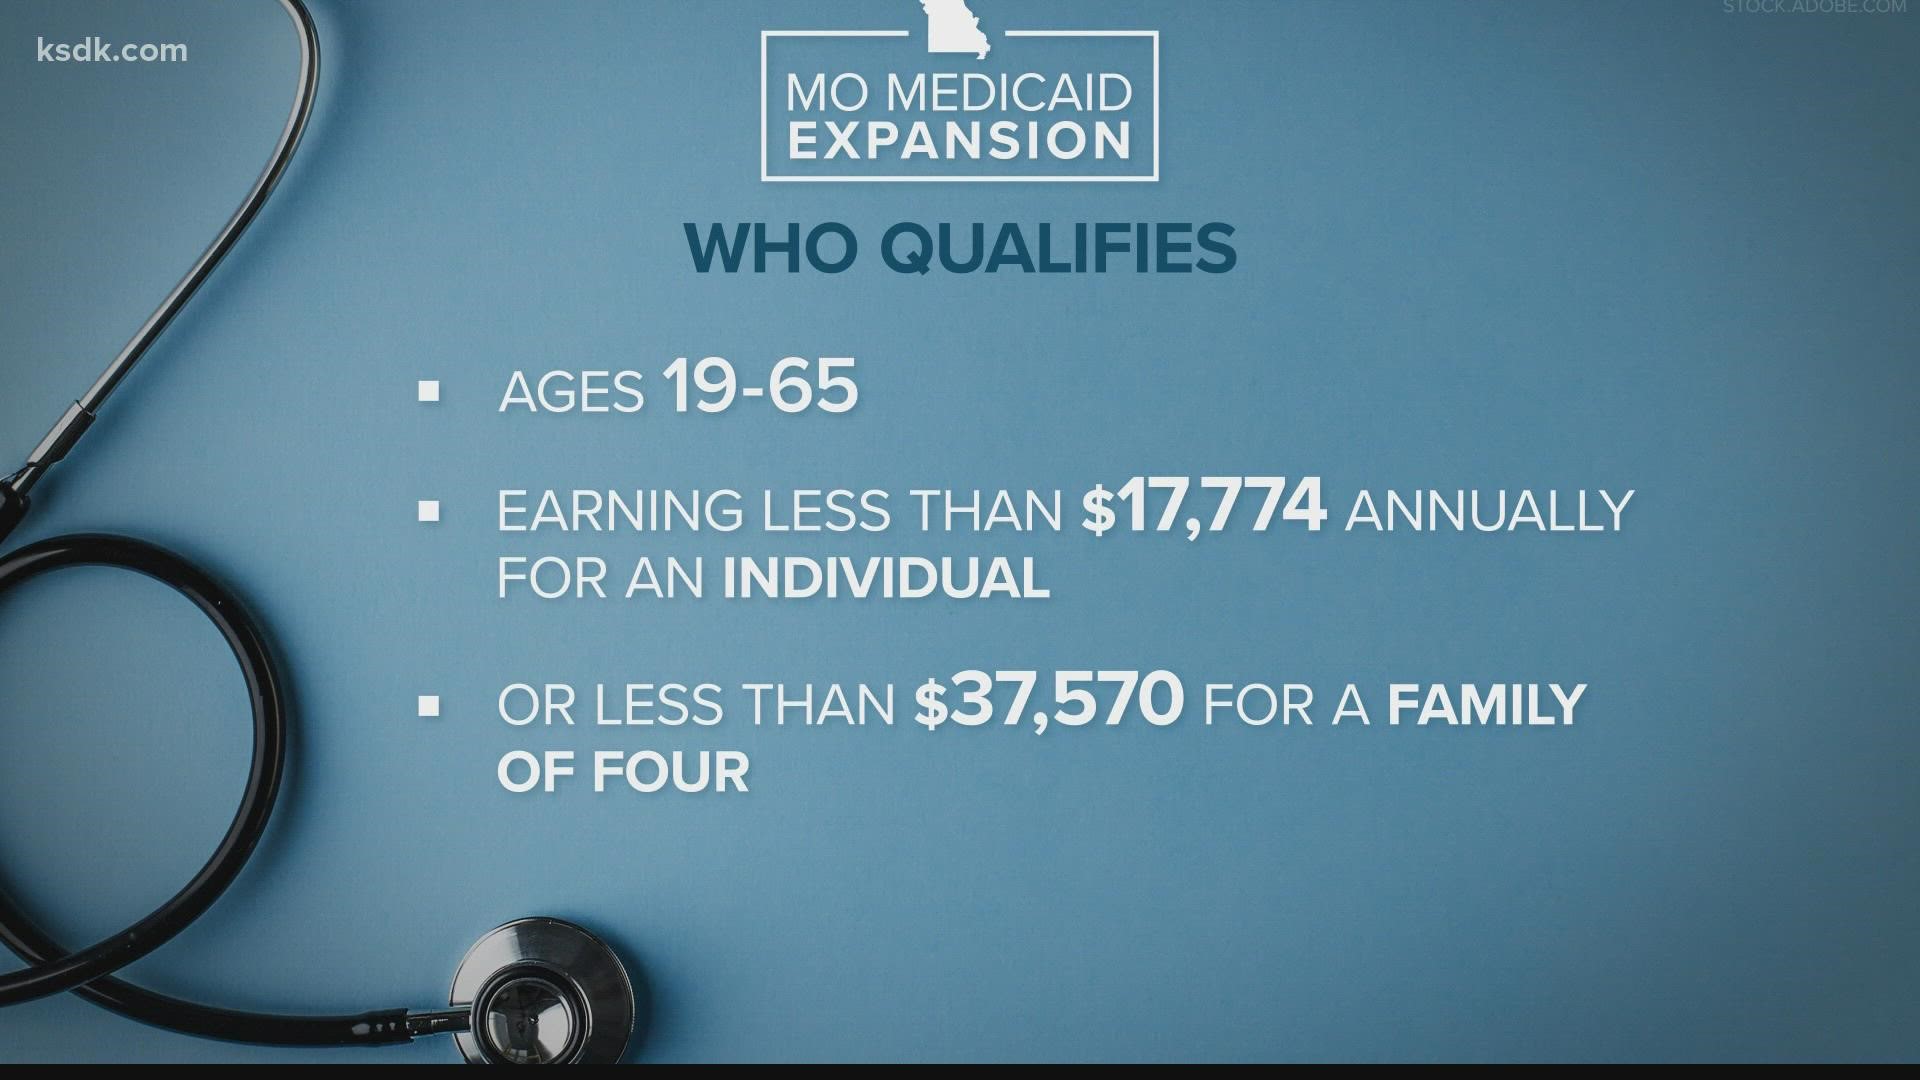 Missouri's Medicaid expansion impacts 275,000 Missourians